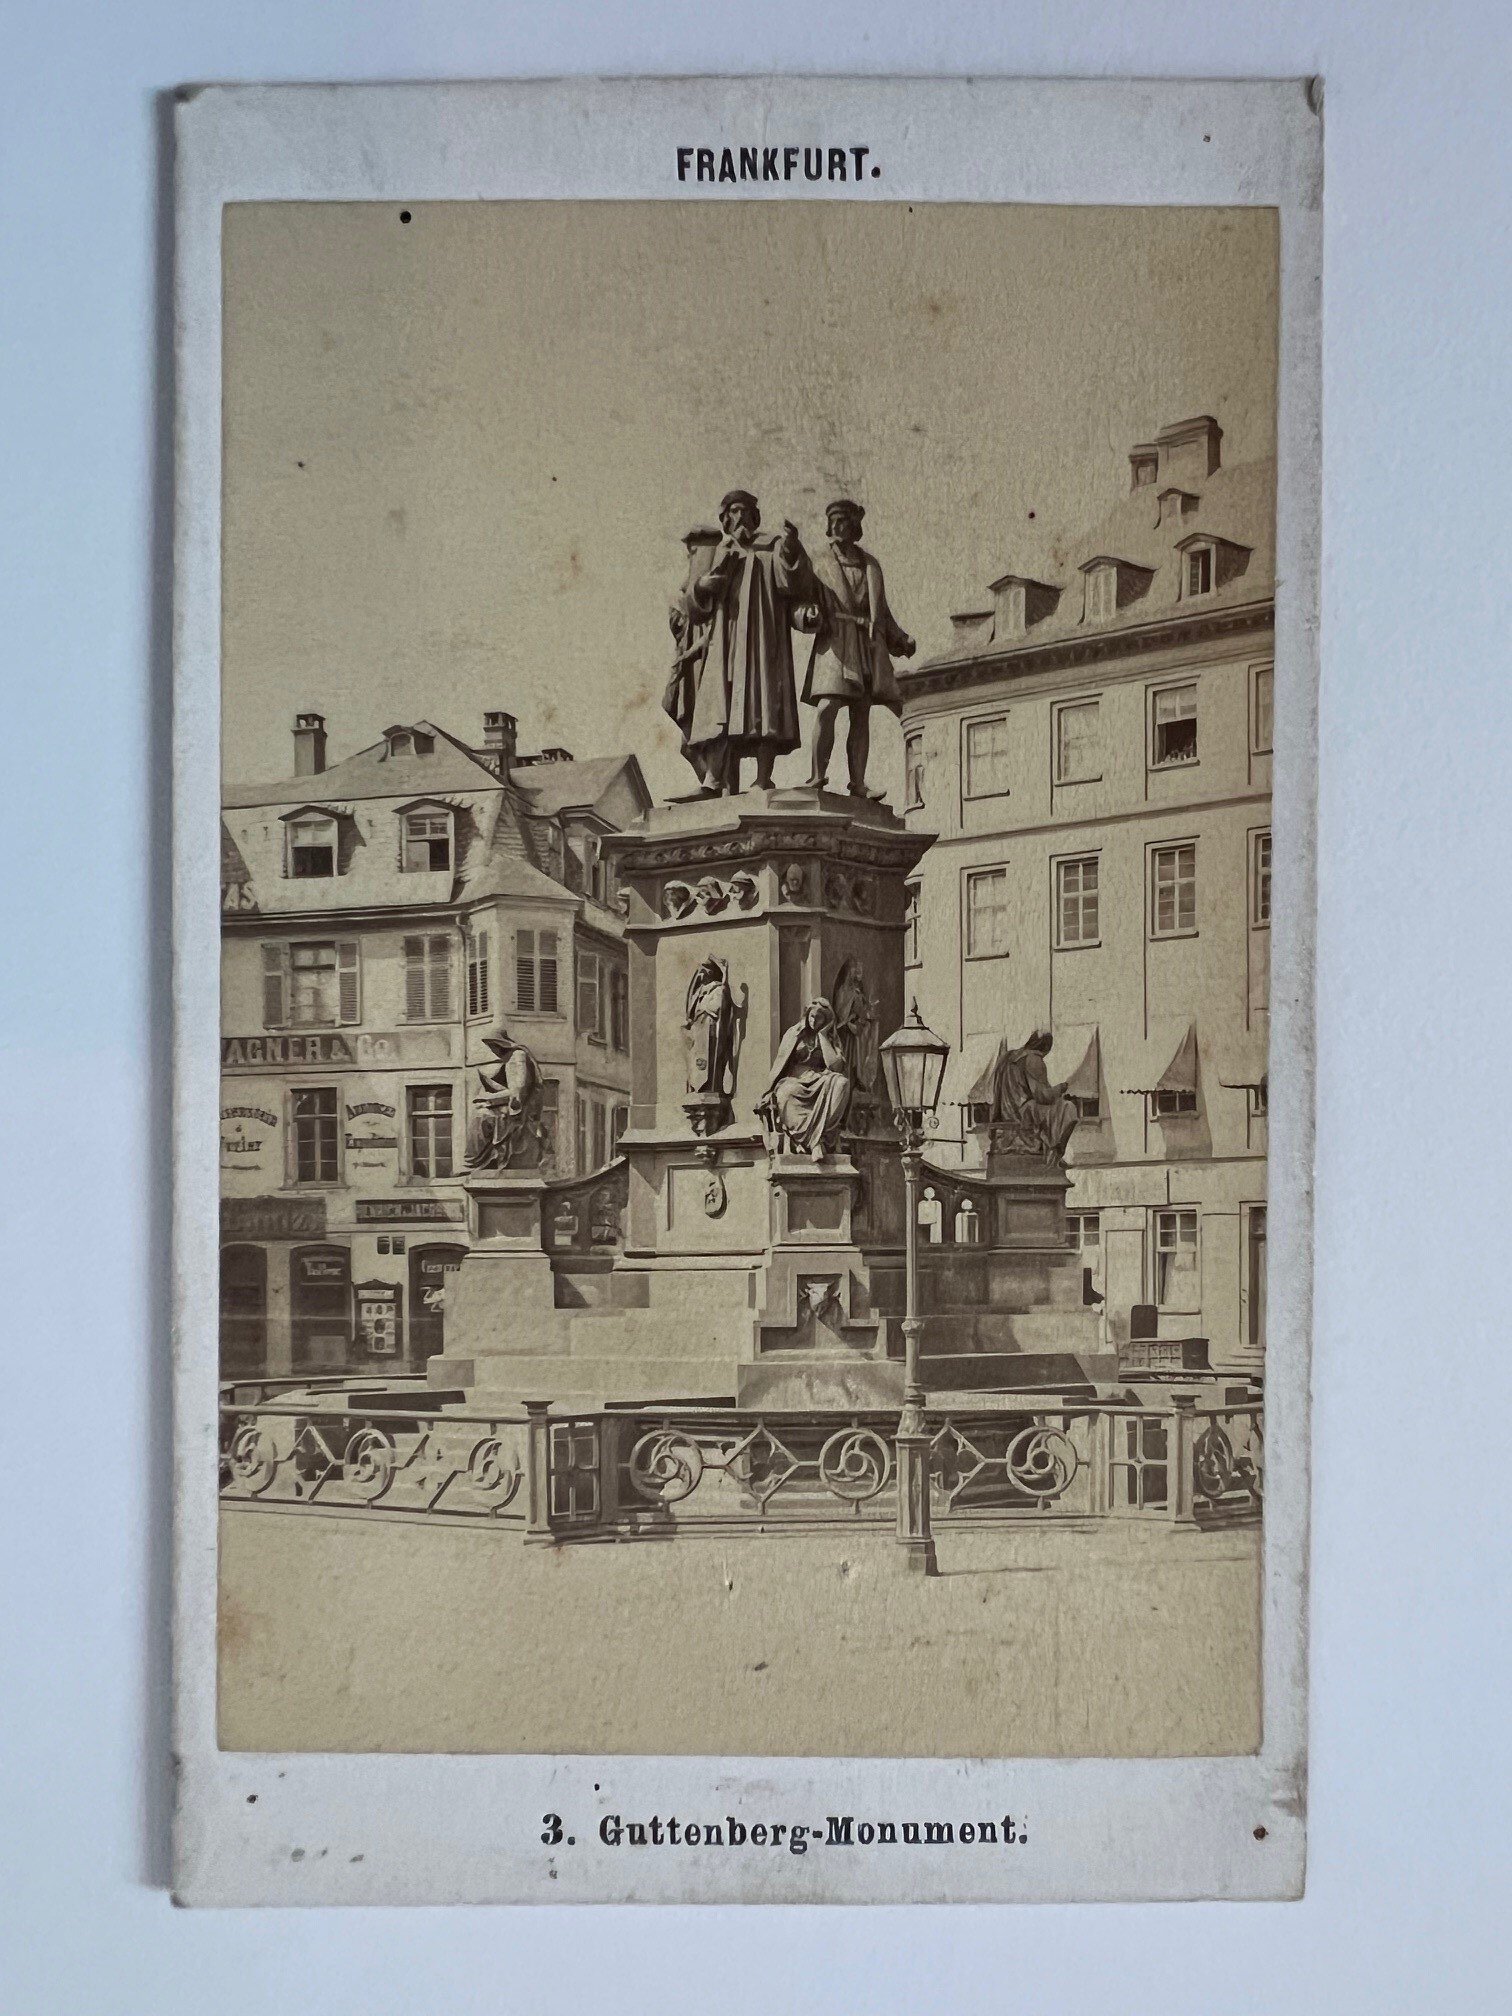 CdV, Frantisek Fridrich, Frankfurt, Nr. 3, Guttenberg-Monument, ca. 1875 (Taunus-Rhein-Main - Regionalgeschichtliche Sammlung Dr. Stefan Naas CC BY-NC-SA)